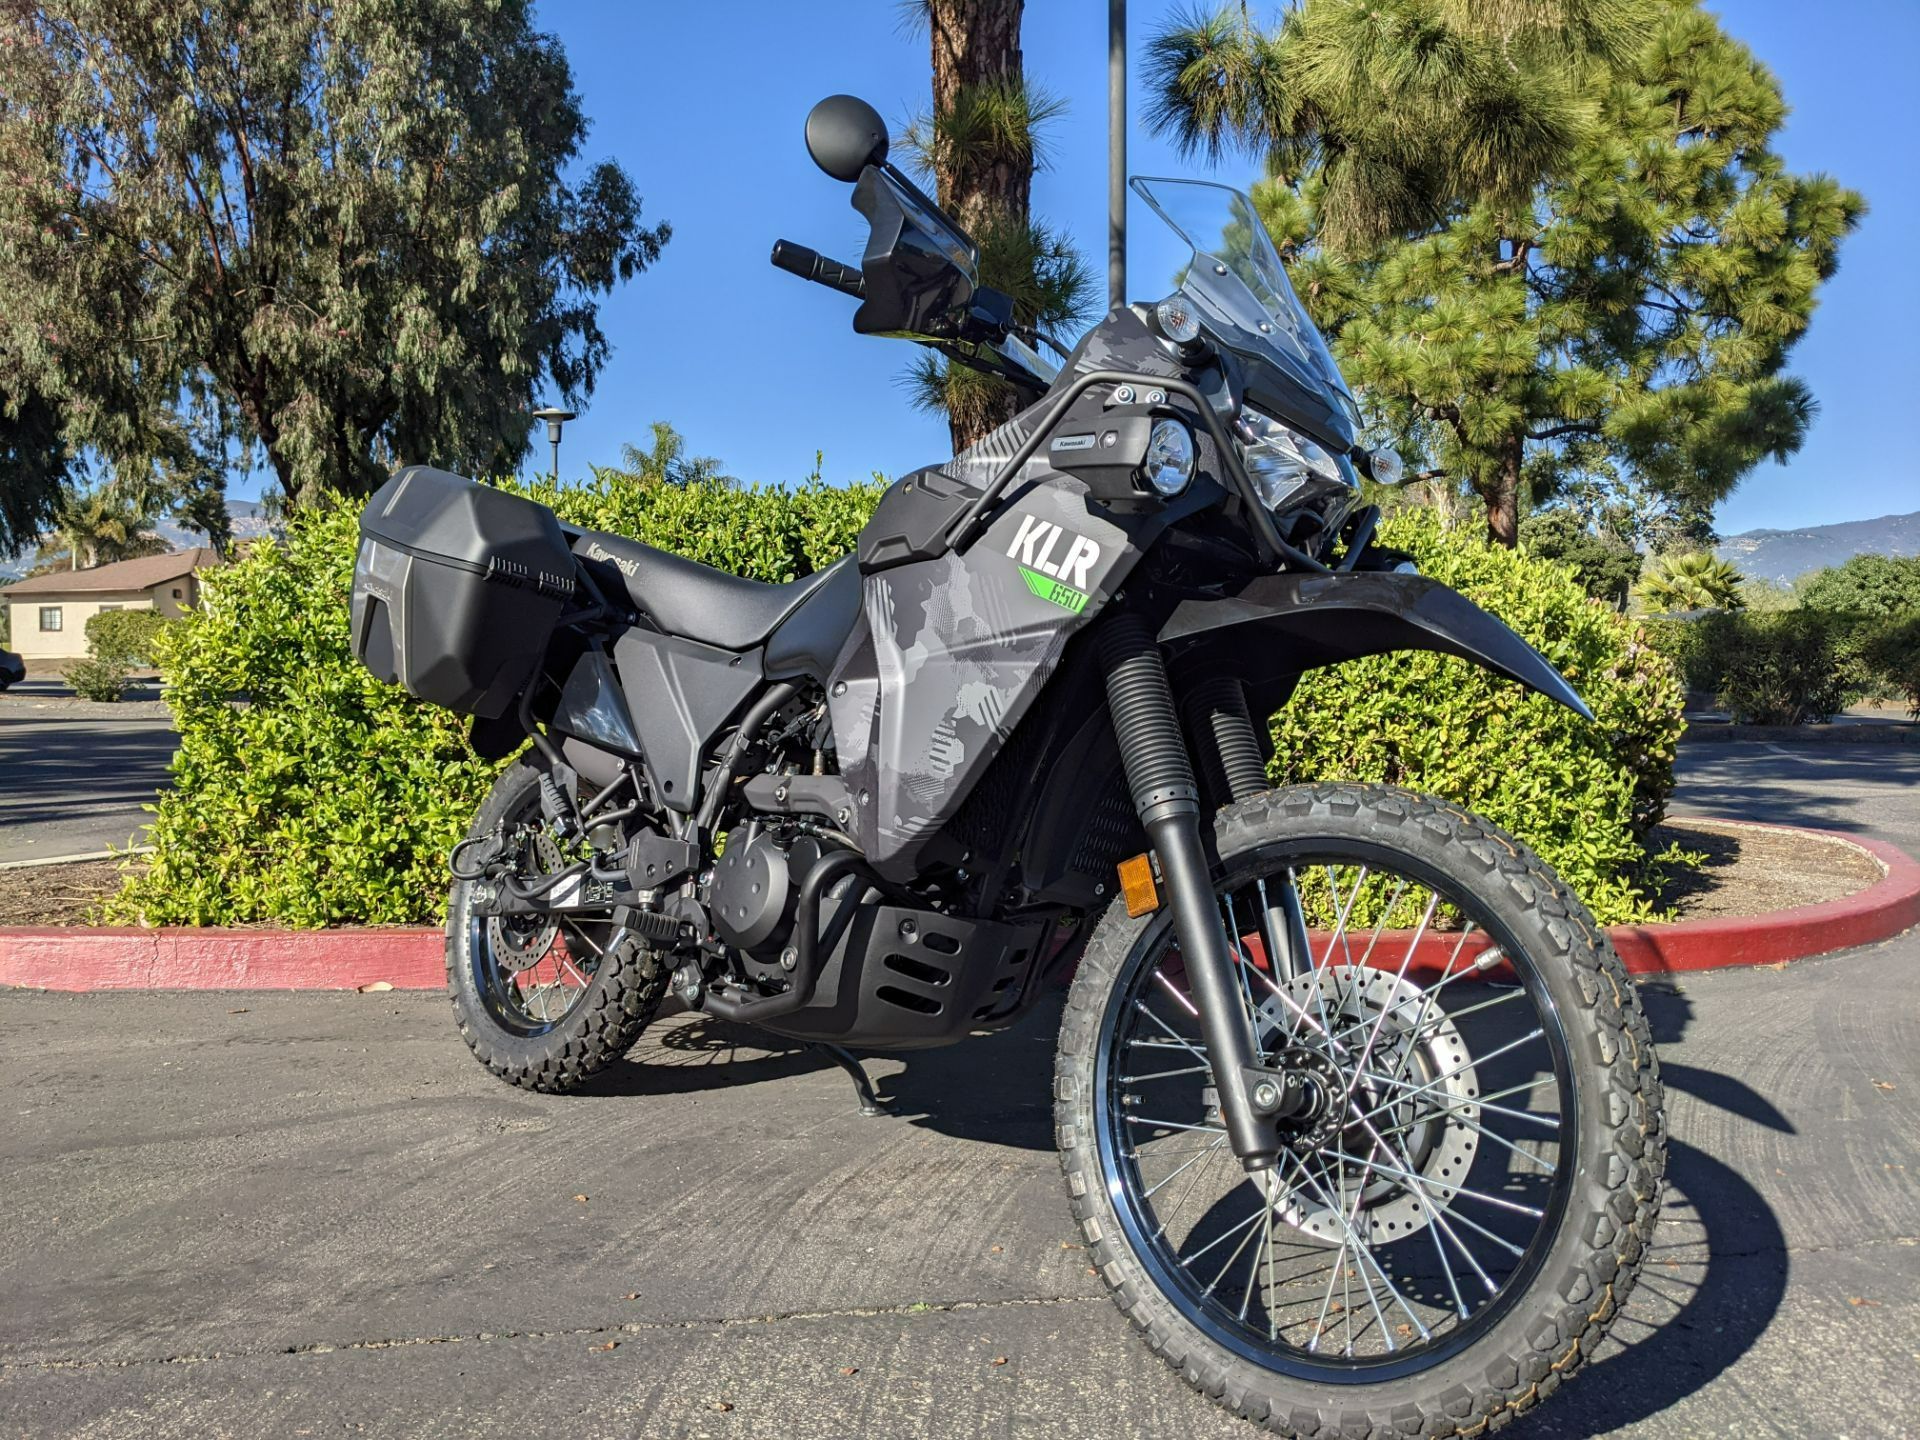 2022 Kawasaki KLR 650 Adventure ABS, USB in Goleta, California - Photo 1